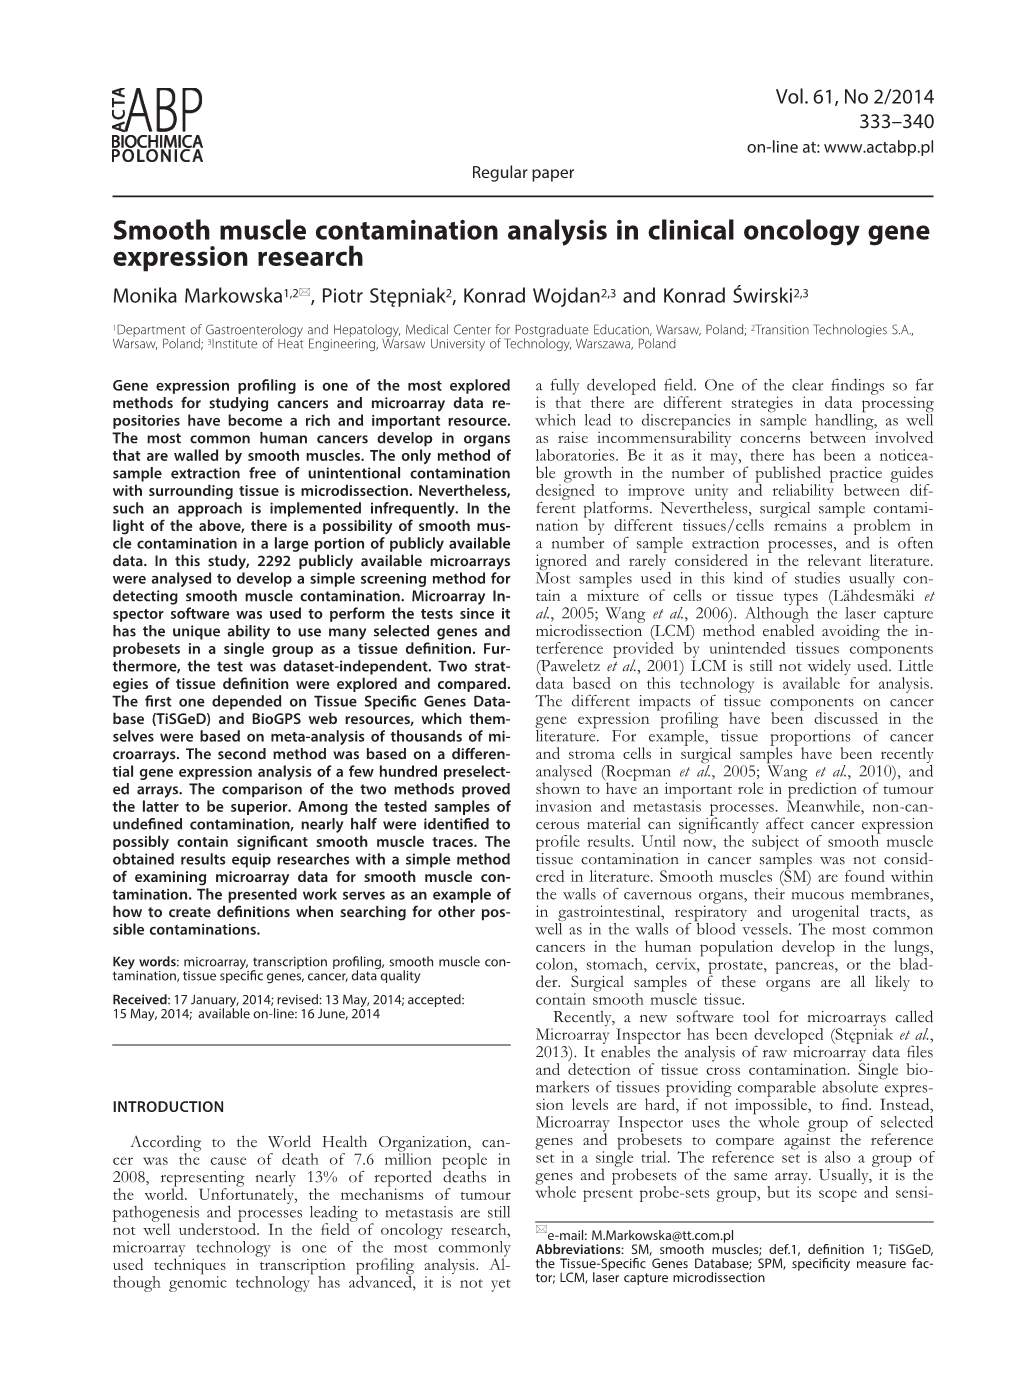 Smooth Muscle Contamination Analysis in Clinical Oncology Gene Expression Research Monika Markowska1,2*, Piotr Stępniak2, Konrad Wojdan2,3 and Konrad Świrski2,3